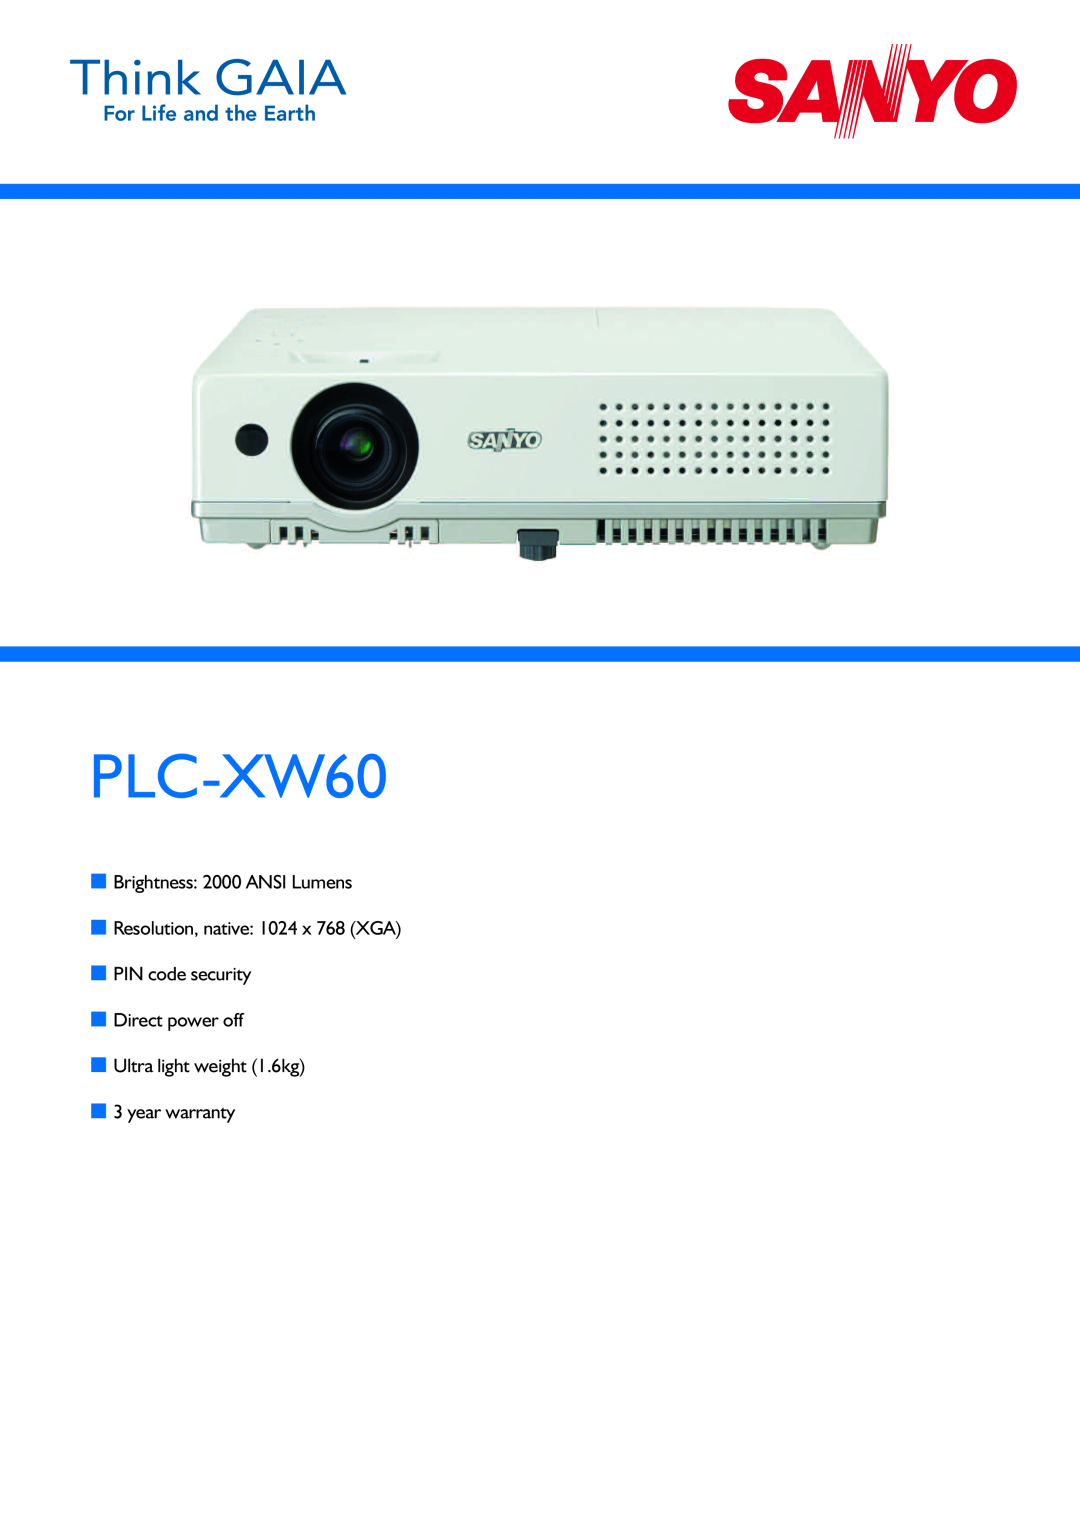 Sanyo PLC-XW60 warranty Brightness: 2000 ANSI Lumens, Resolution, native 1024 x 768 XGA 